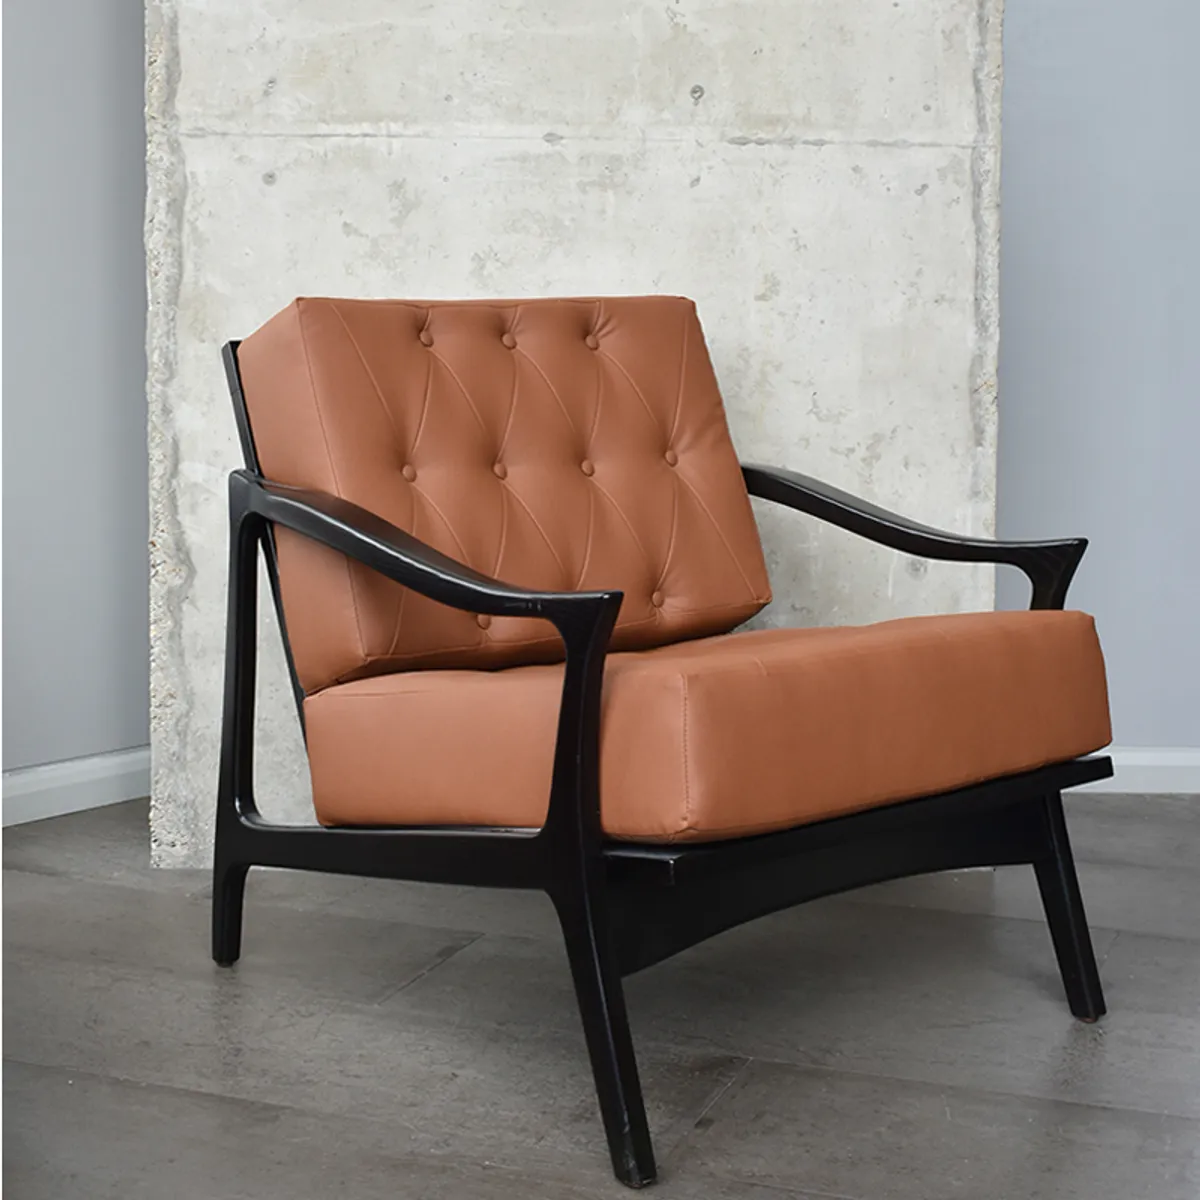 Paddy Lounge Chair 001 2